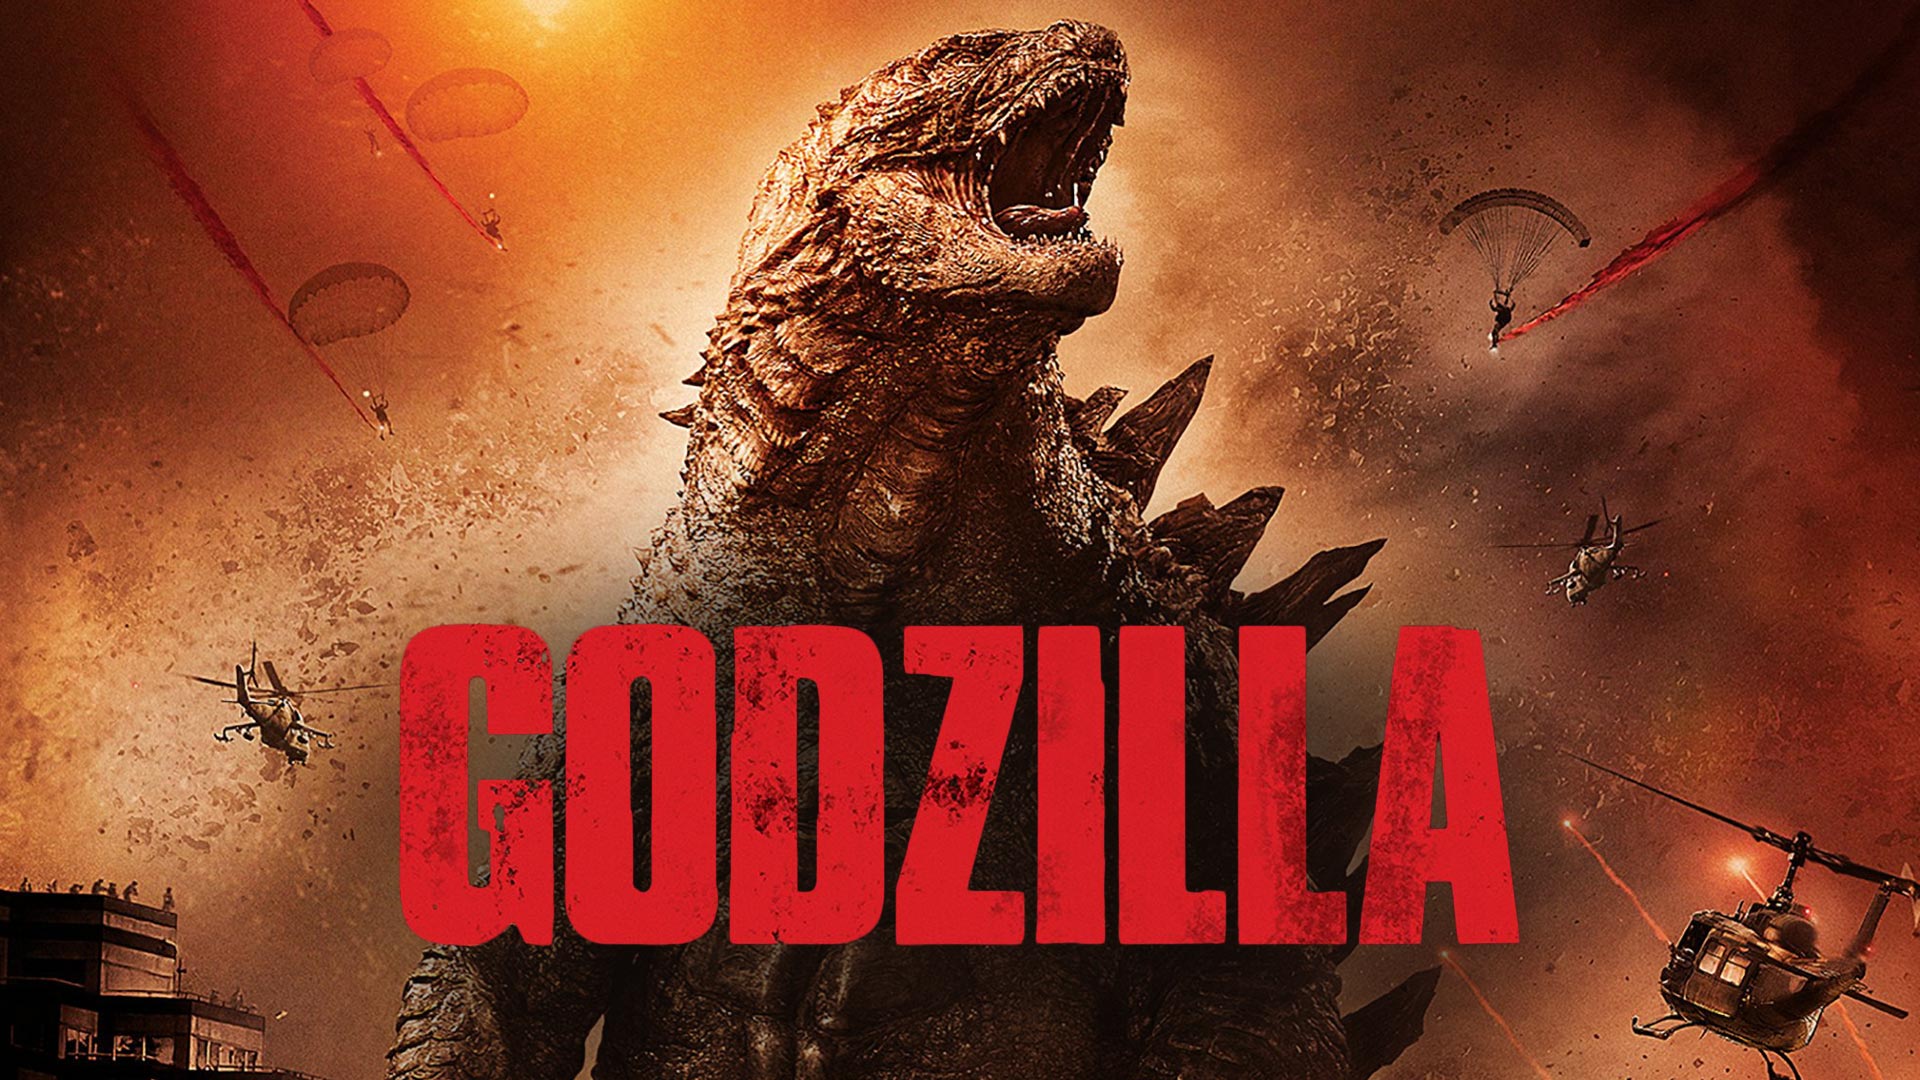 https://www.amazon.com/Godzilla-Aaron-Taylor-Johnson/dp/B00KG2QMEK